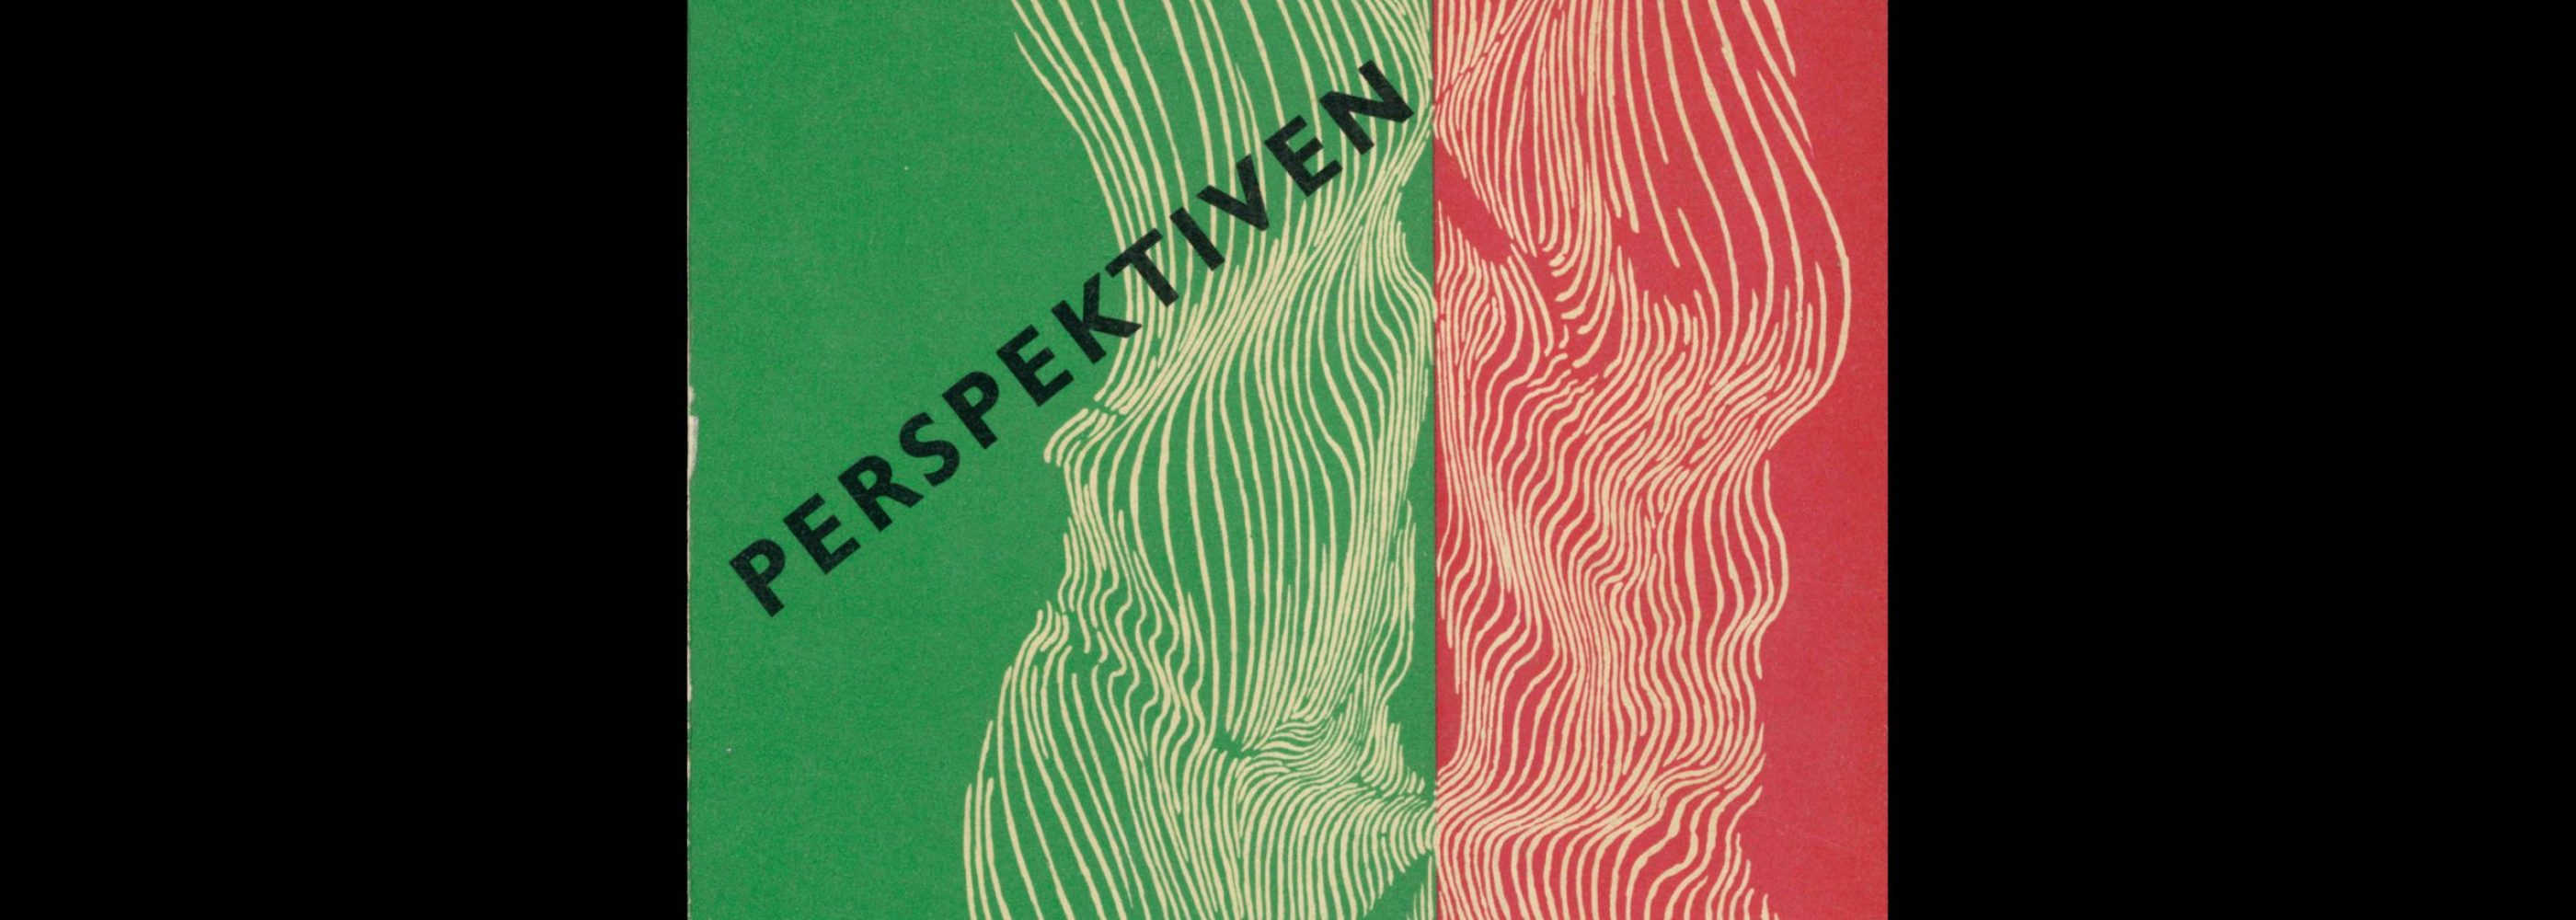 Perspektiven, Literatur, Kunst, Musik, 6, 1953. Cover design by Herbert Bayer